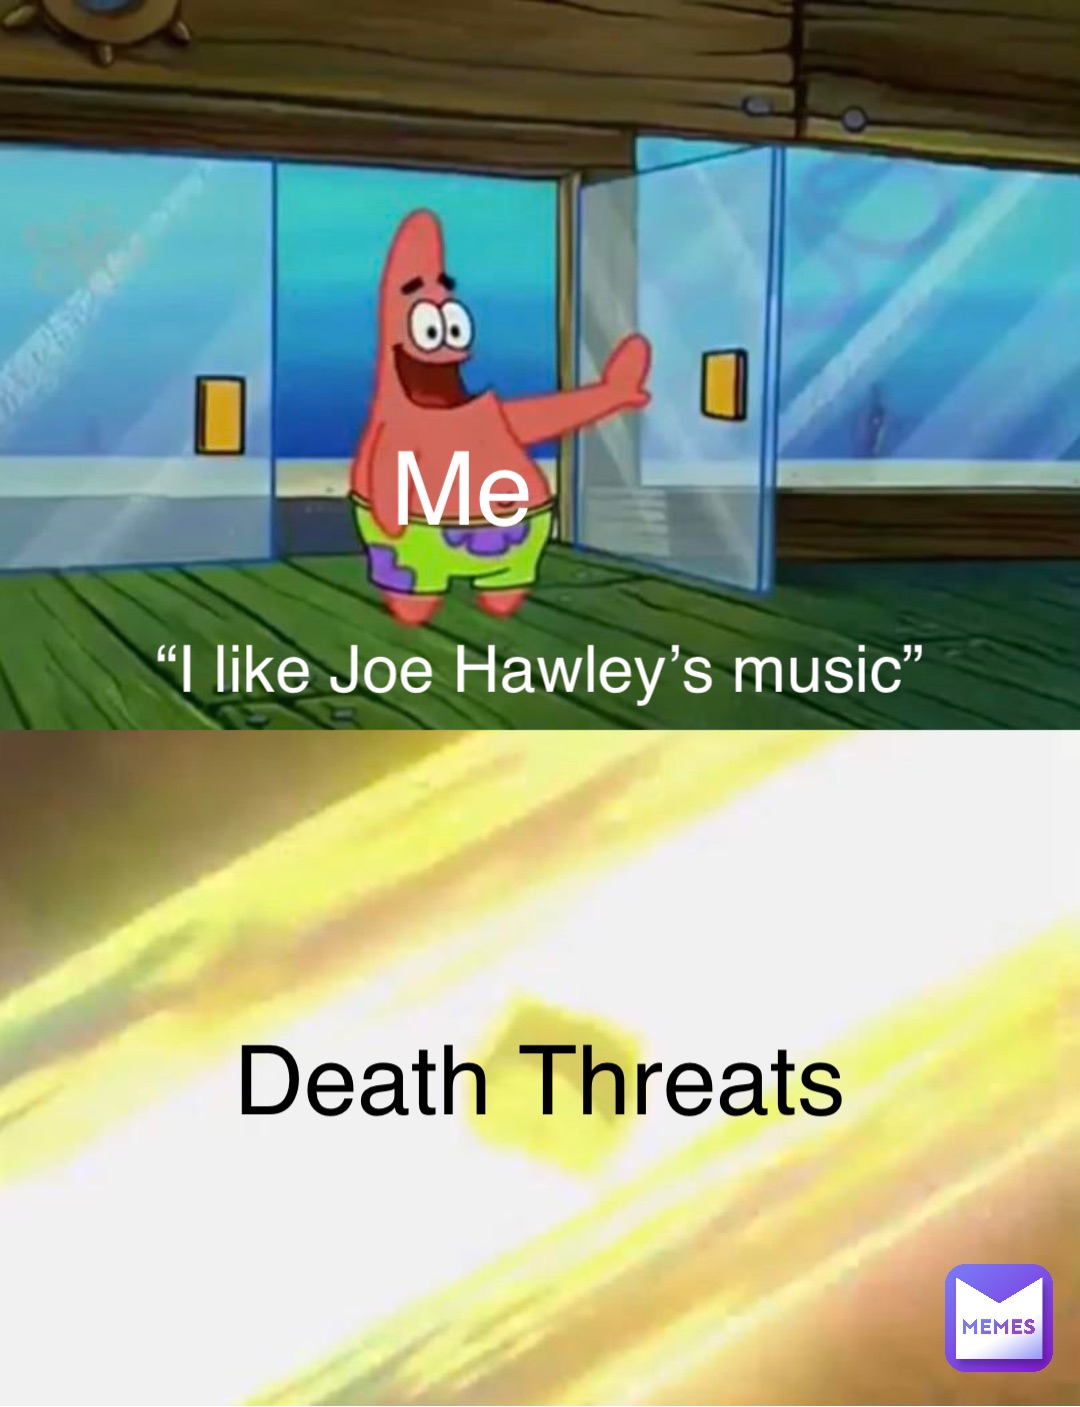 Me Death Threats “I like Joe Hawley’s music”